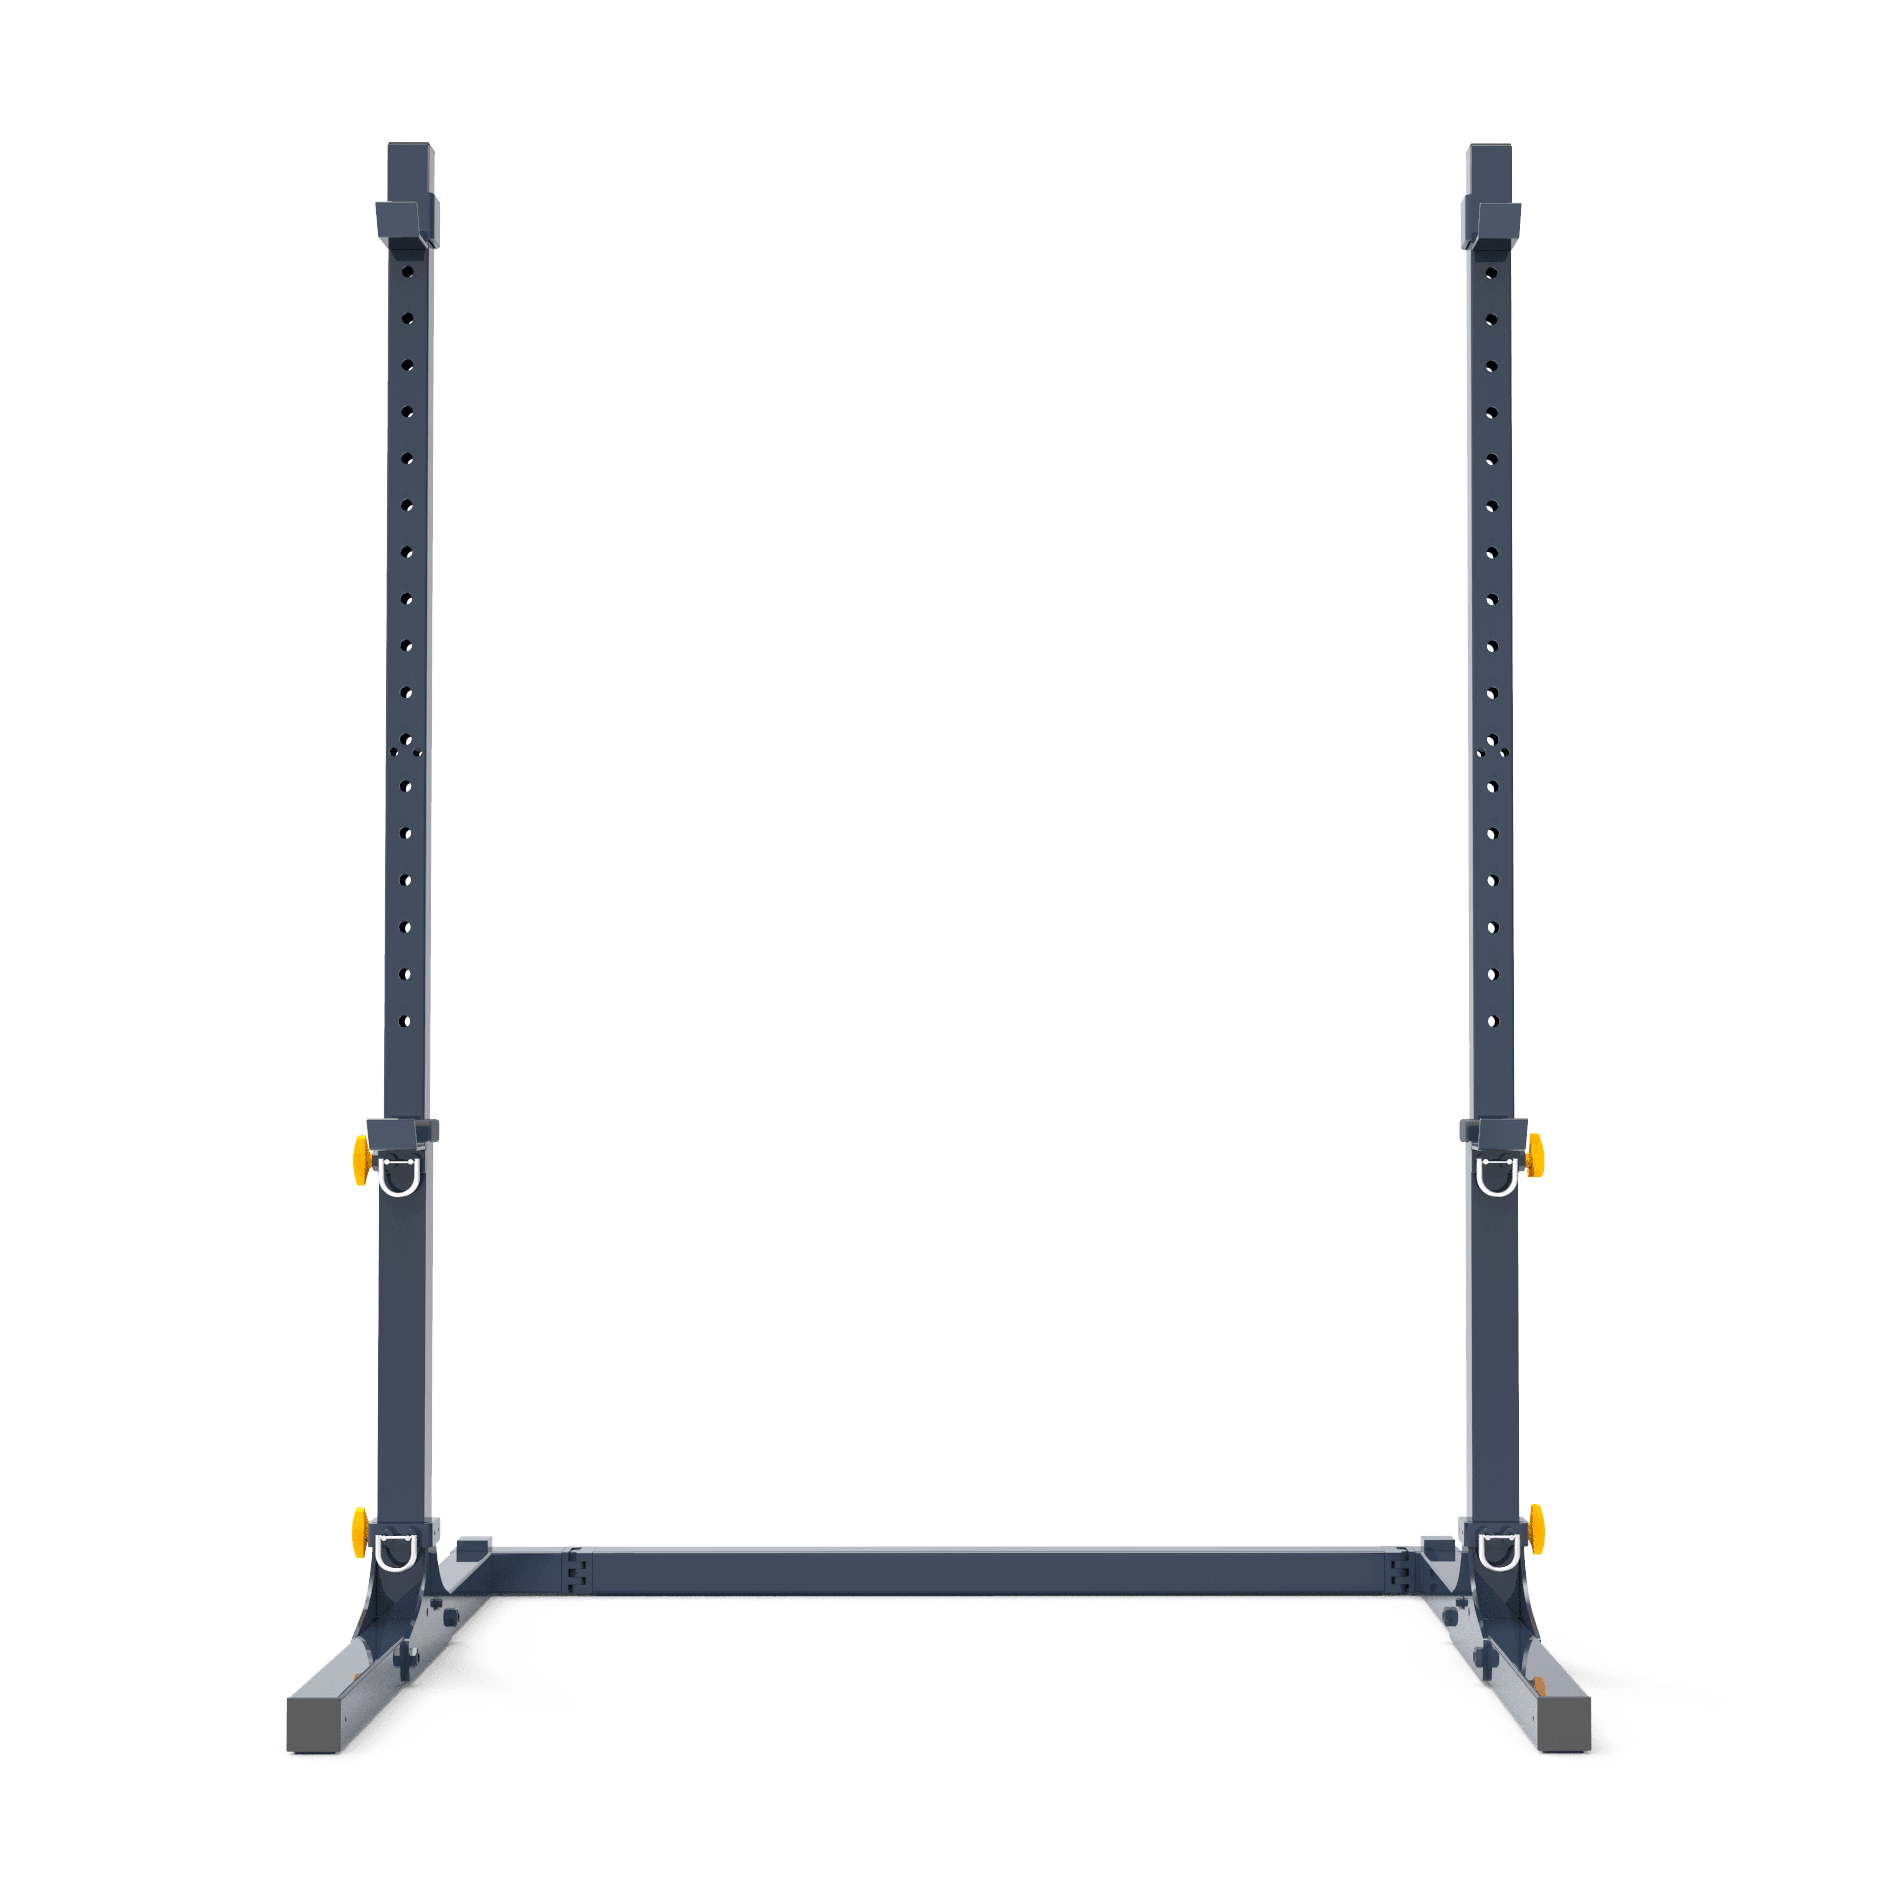 Verse™ Agile Rack - Balance - Verse Fitness